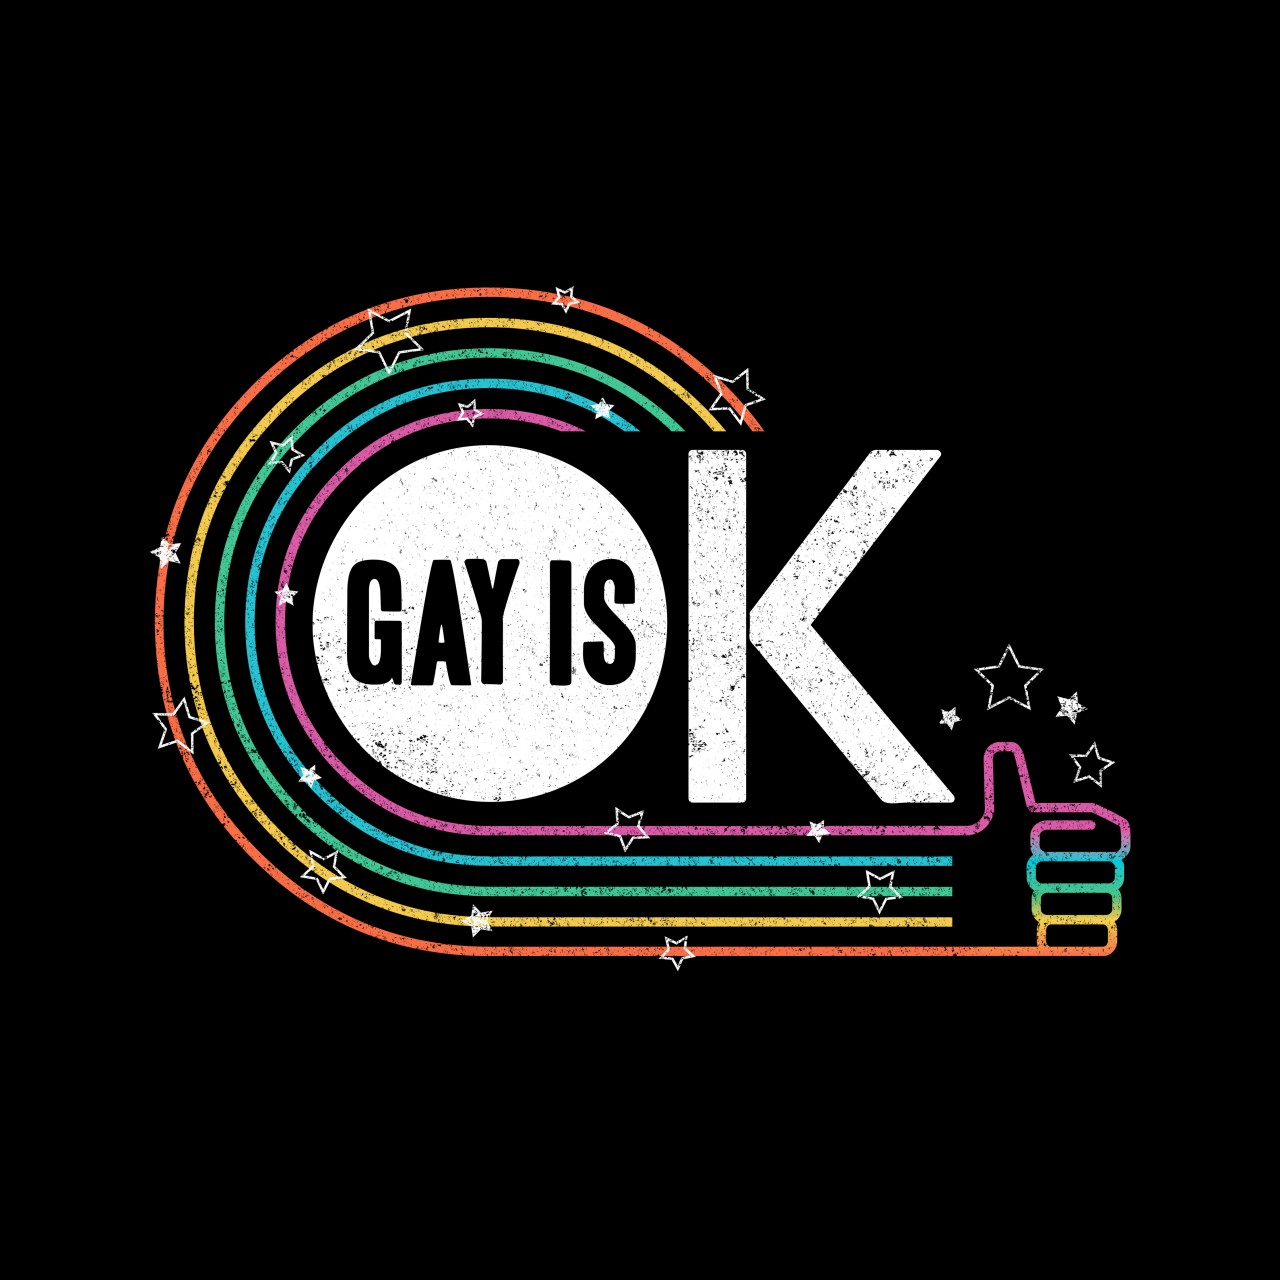 artistquotes_pride_gayisok